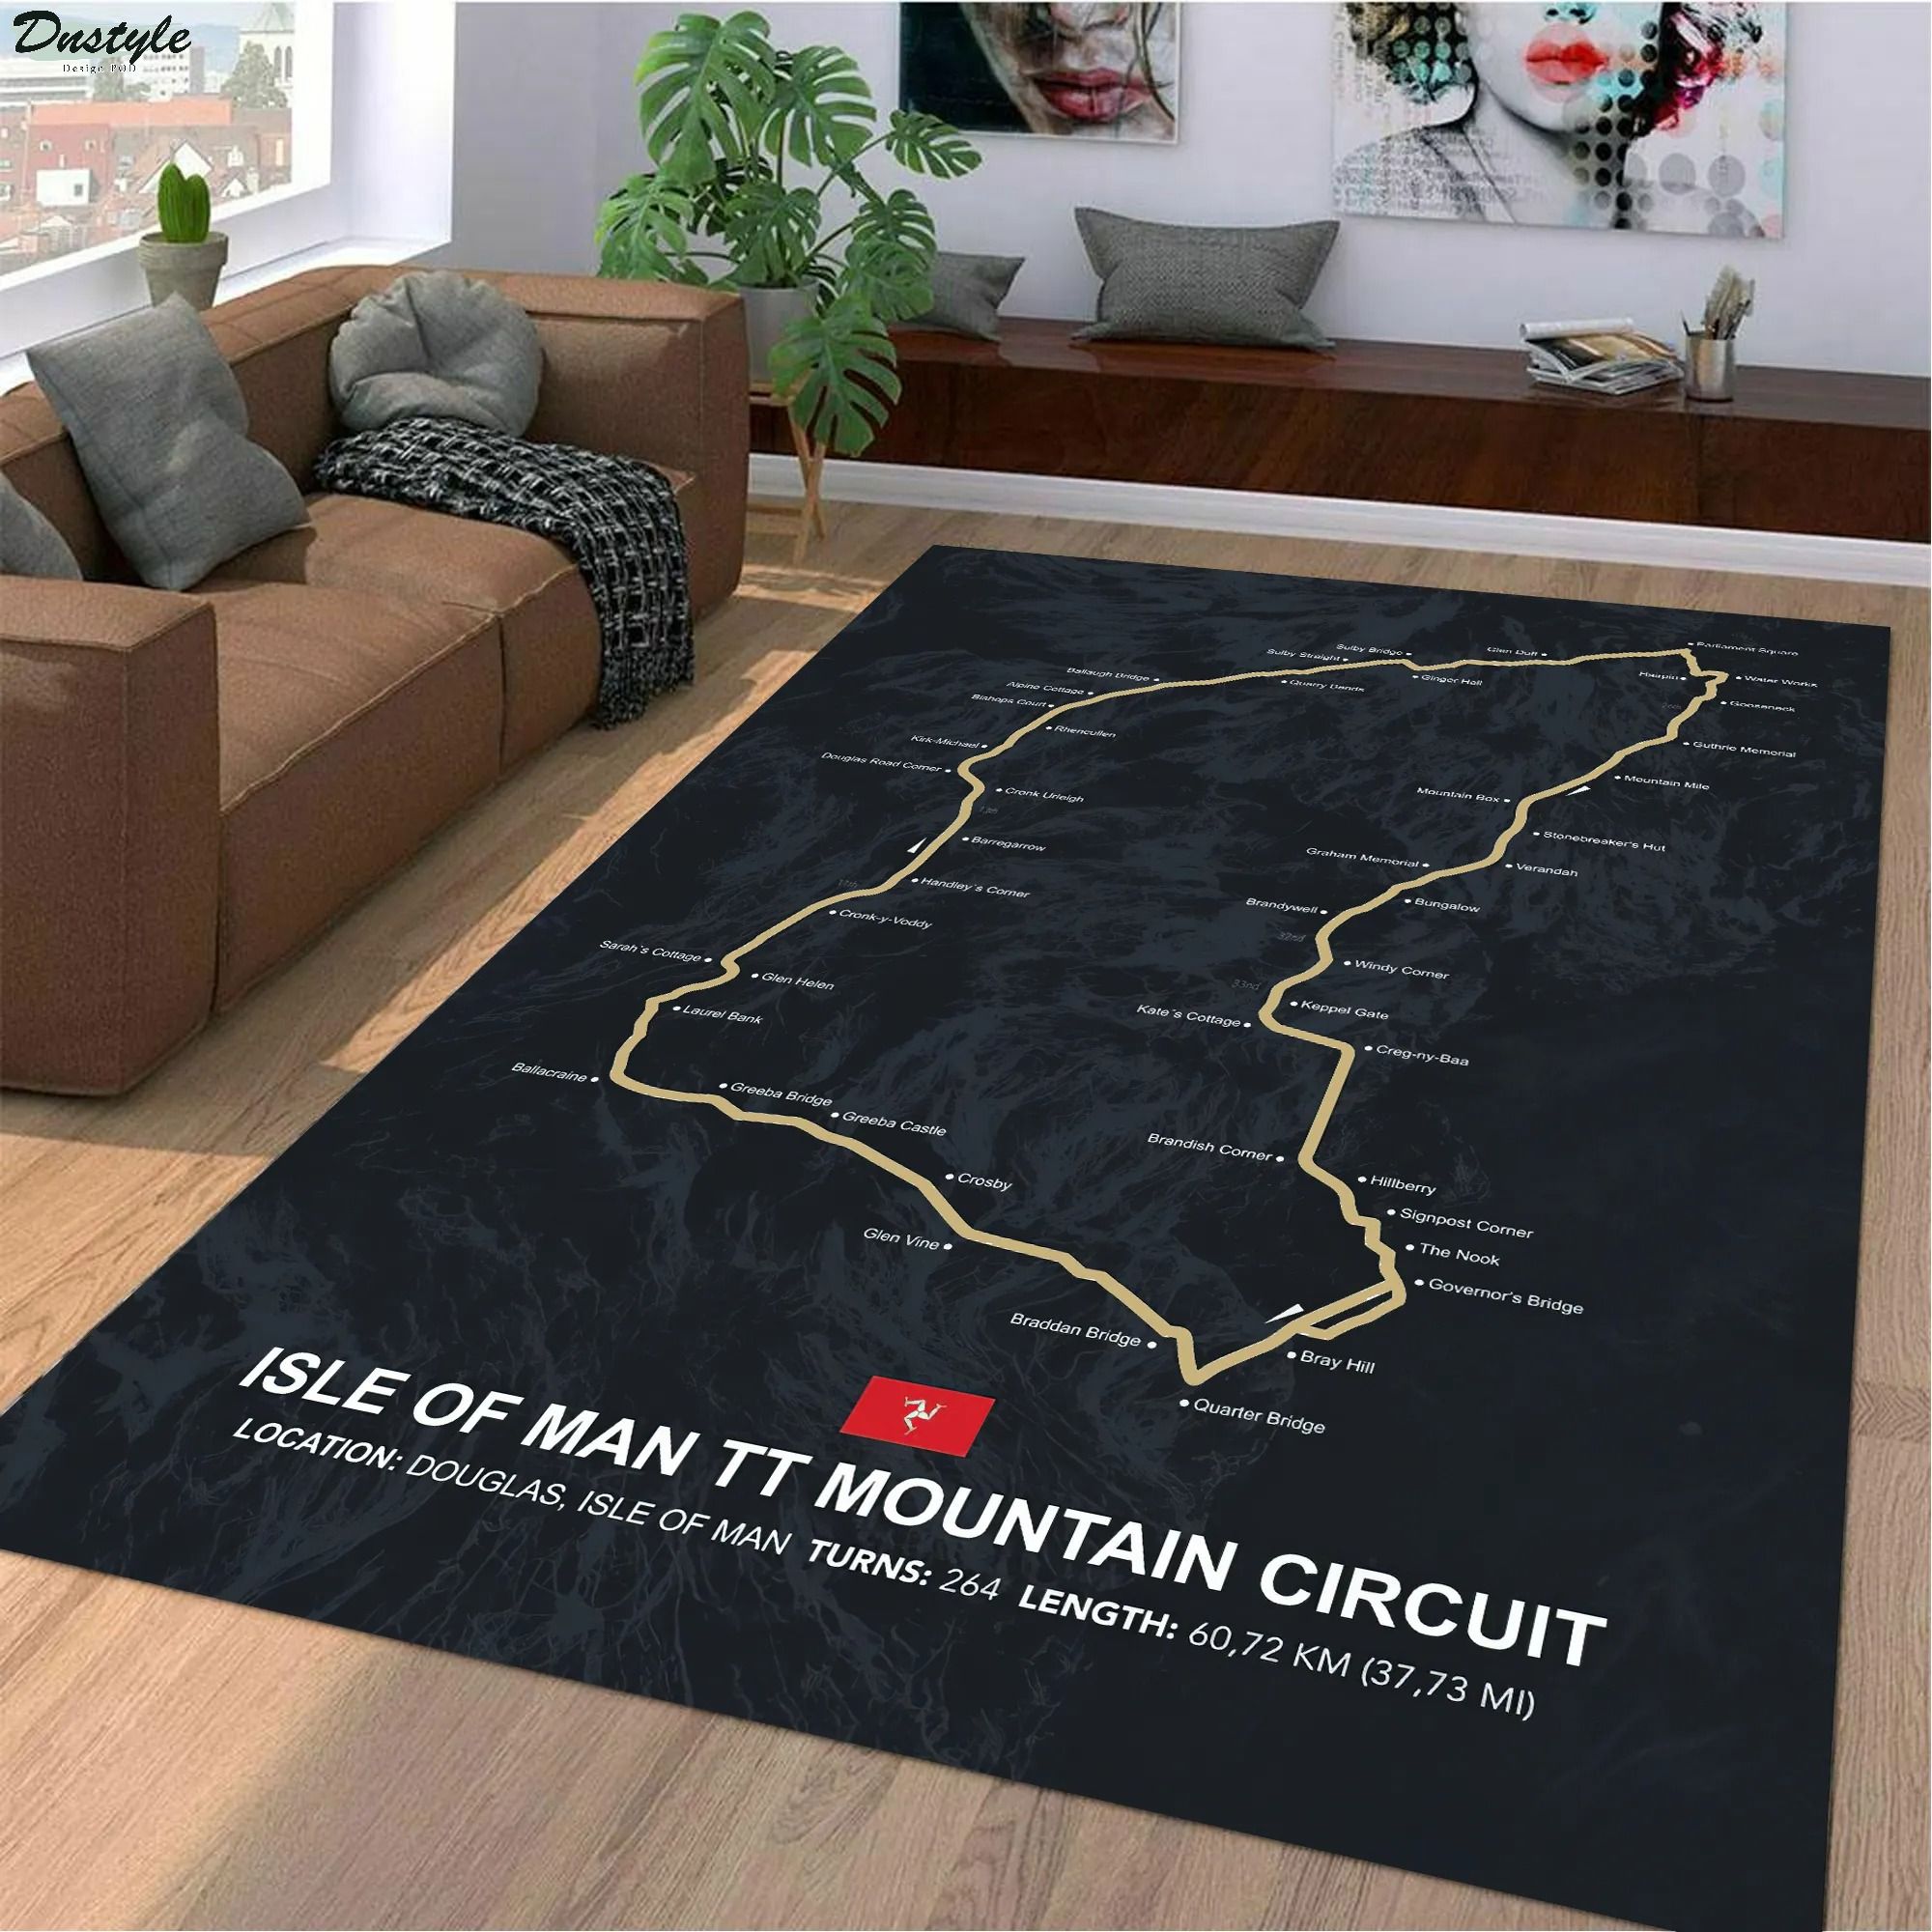 Isle of man tt mountain circuit f1 track rug